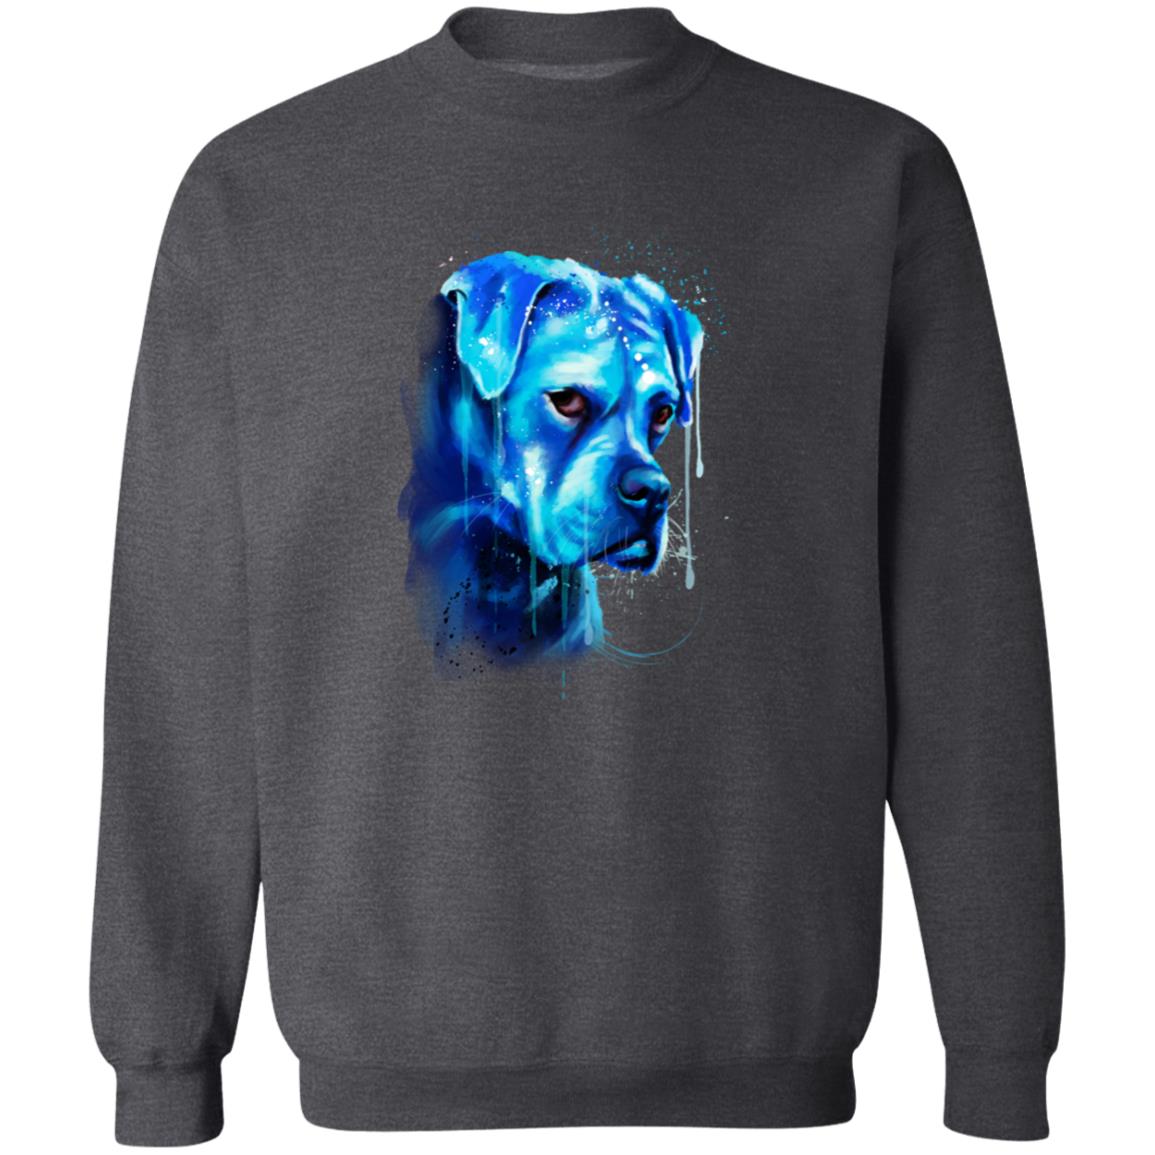 Neon blue Splash Art Pitbull dog Unisex Crewneck Sweatshirt-Family-Gift-Planet